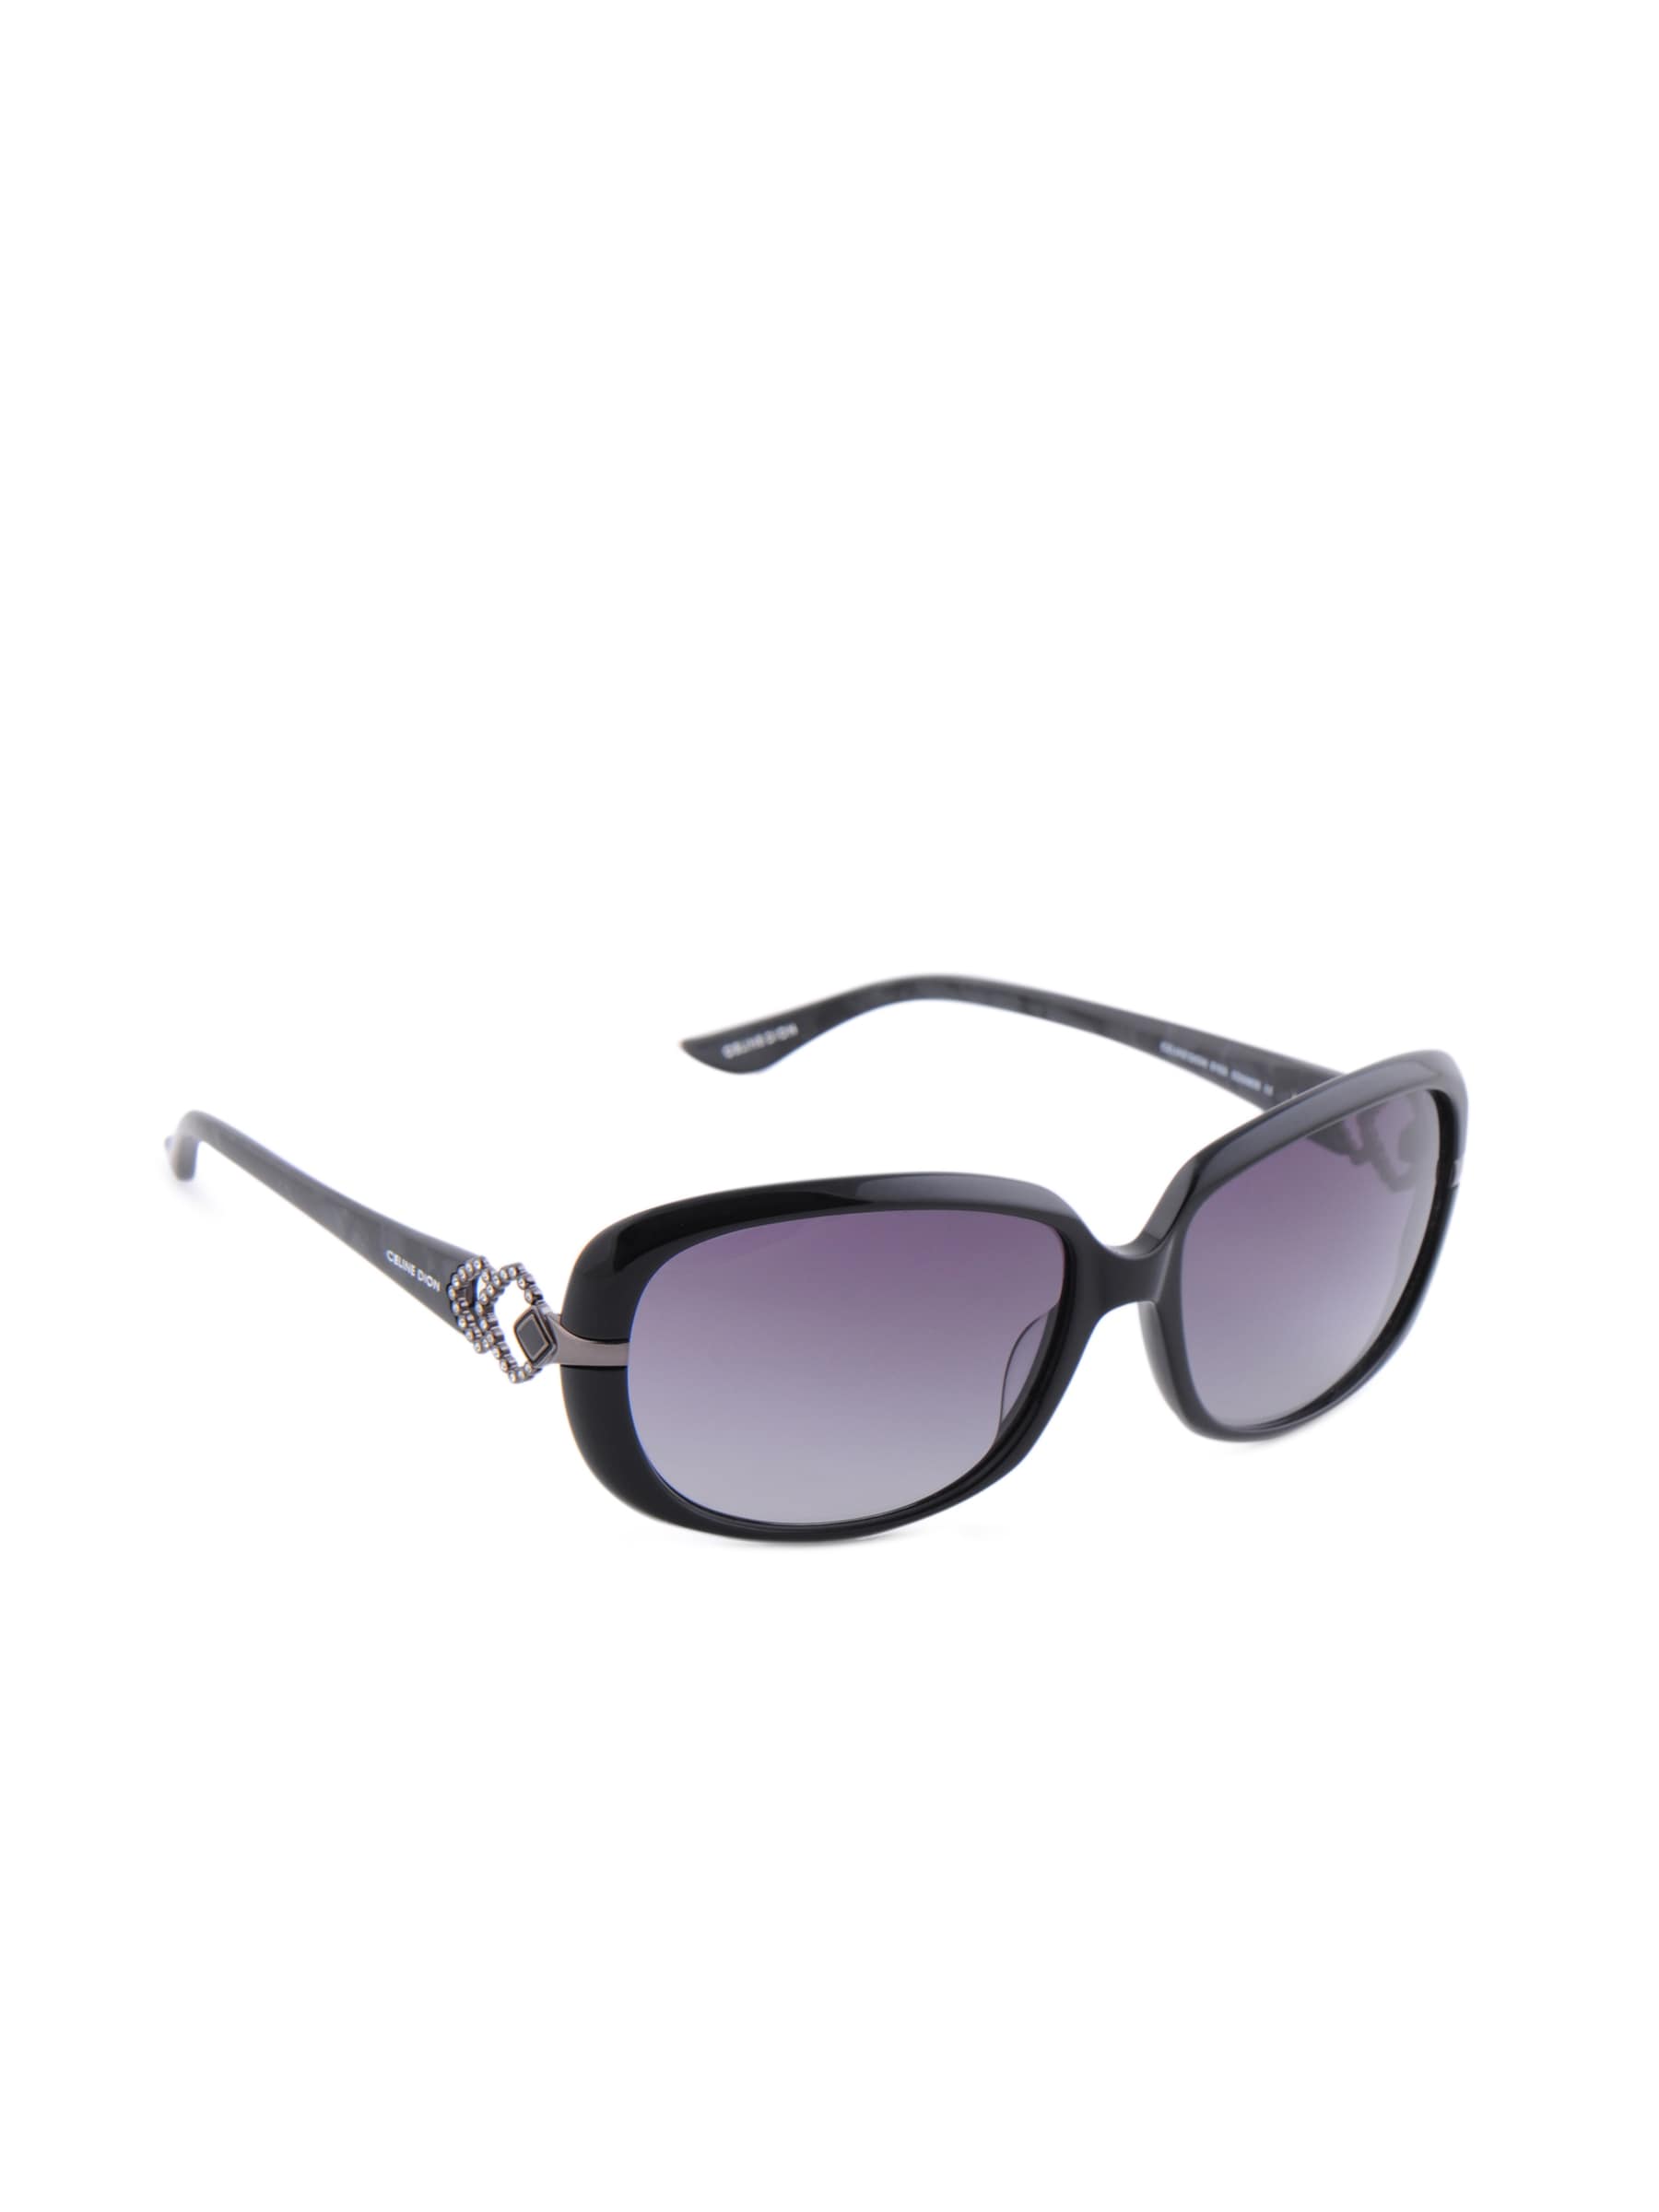 Celine Dion Women Black Frame Sunglasses